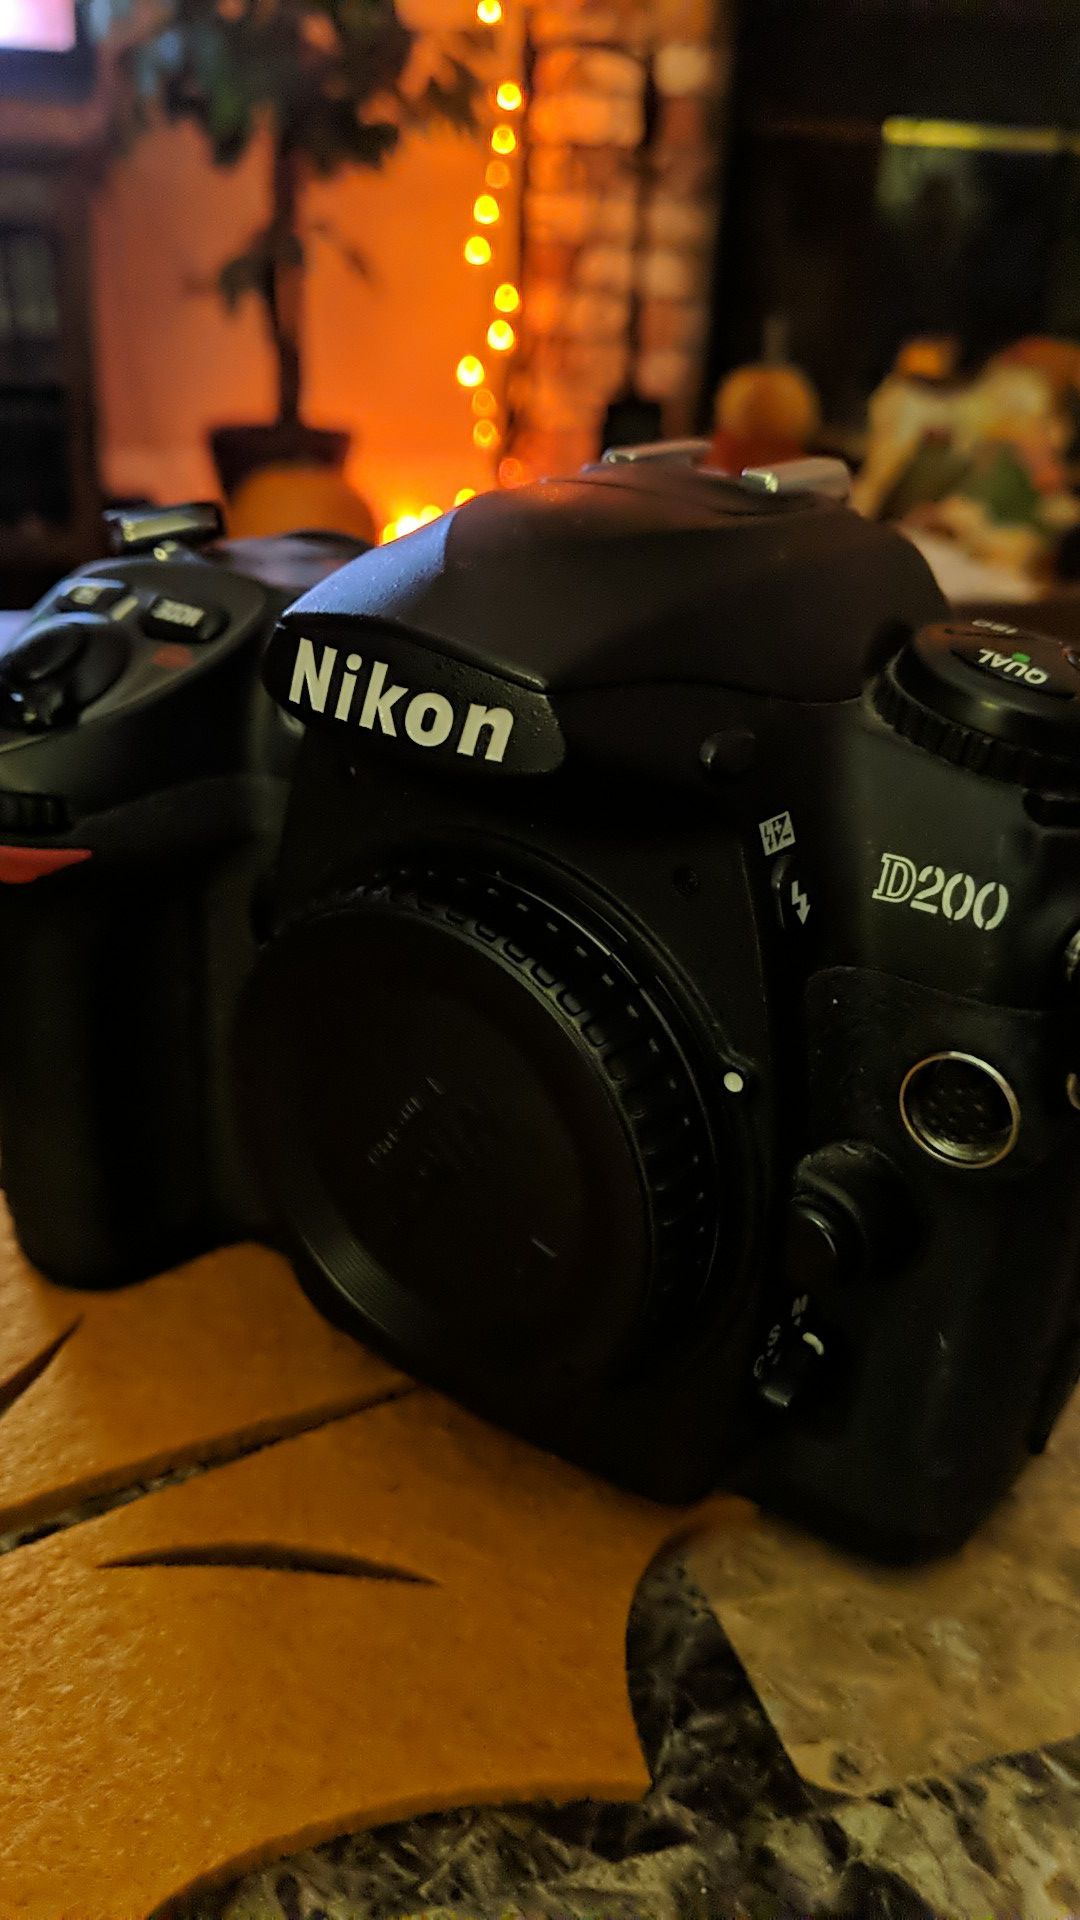 Nikon D200 digital SLR